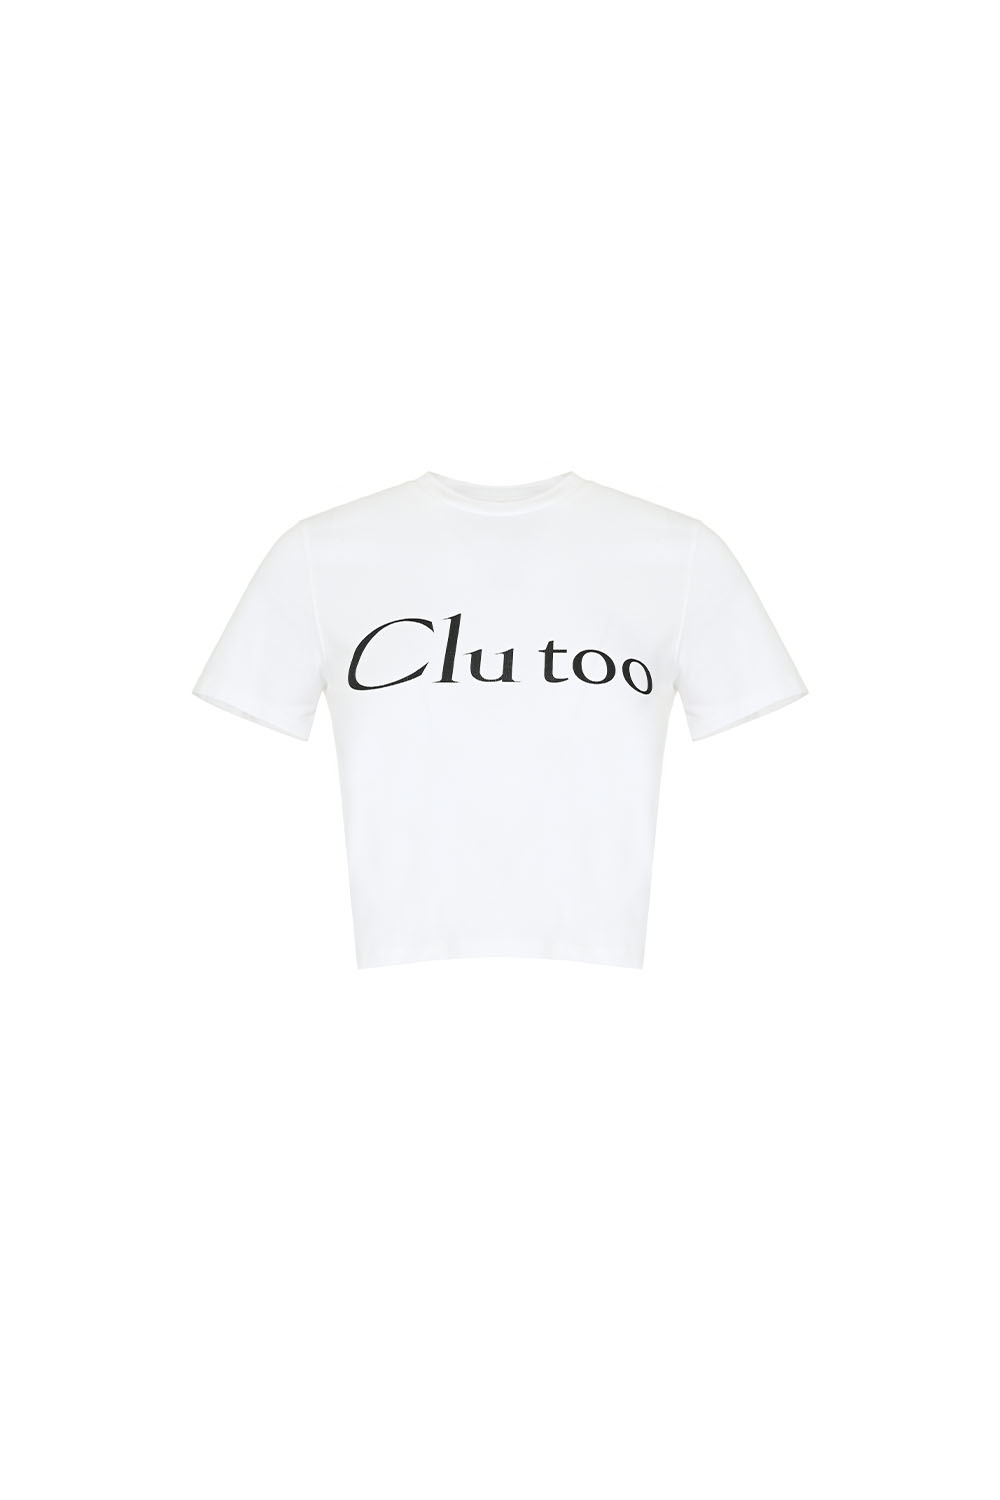 Clu too Crop T-shirt_white